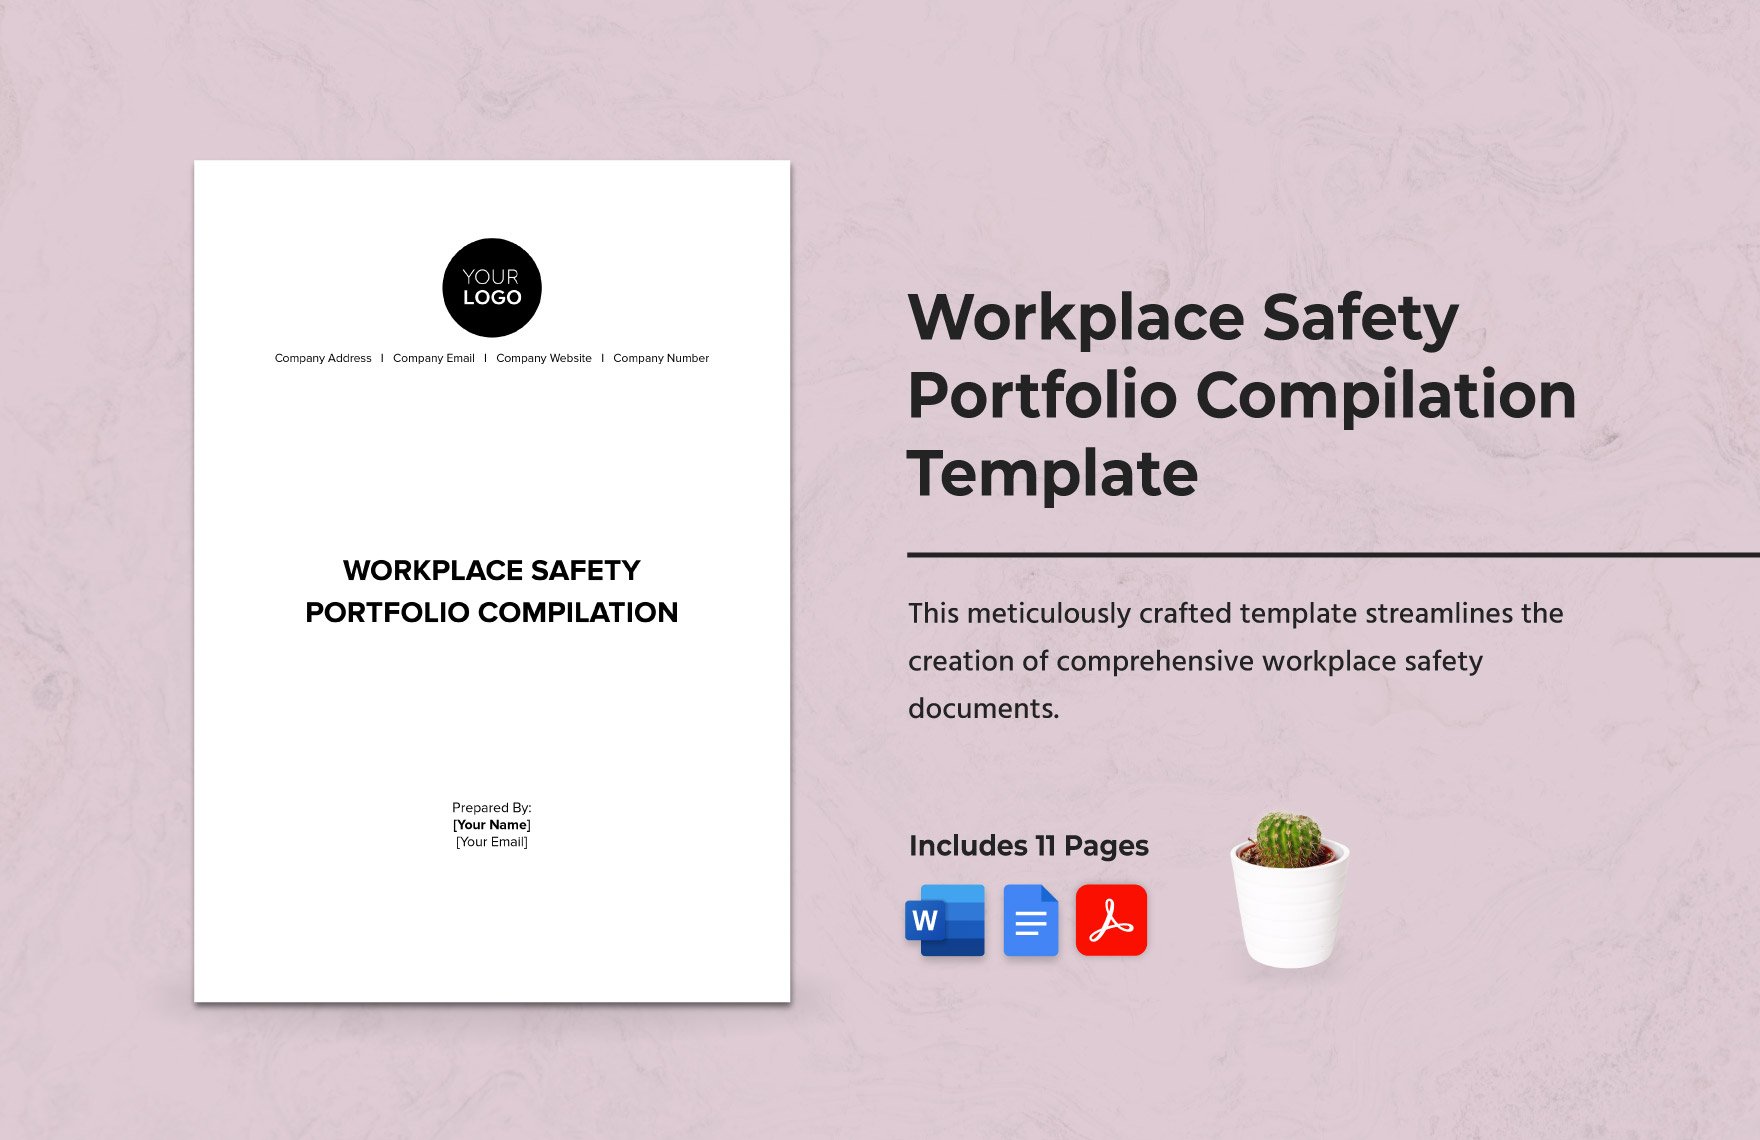 Workplace Safety Portfolio Compilation Template